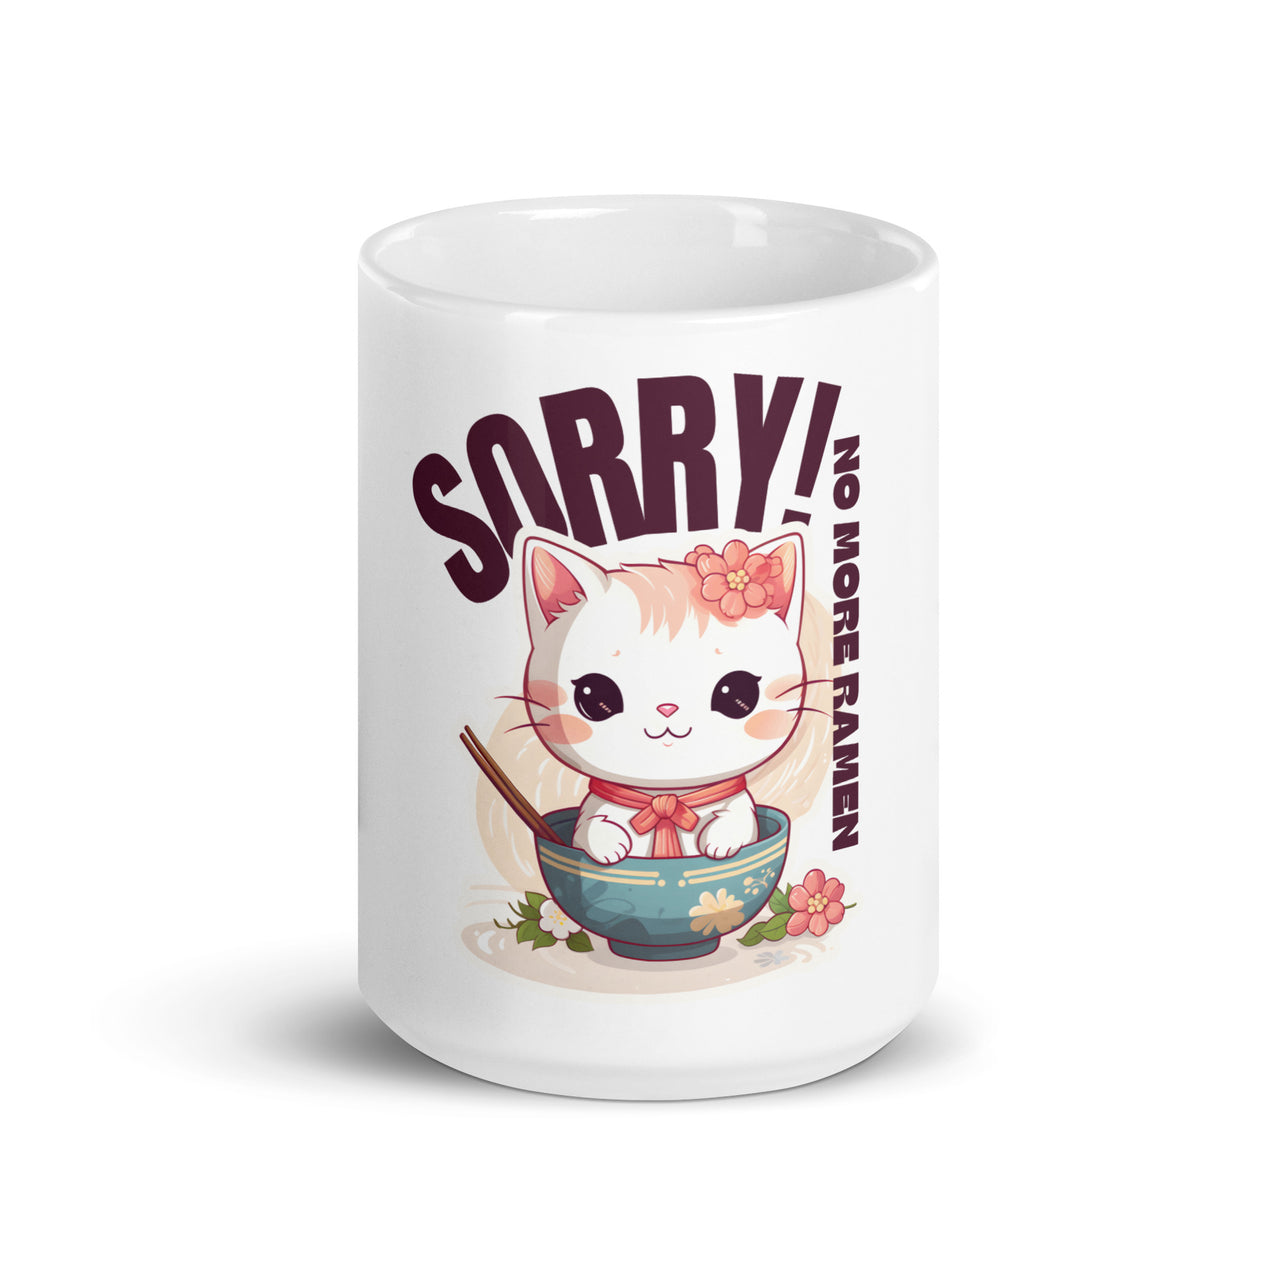 Sorry, No More Ramen: Anime Cat in Bowl White Mug